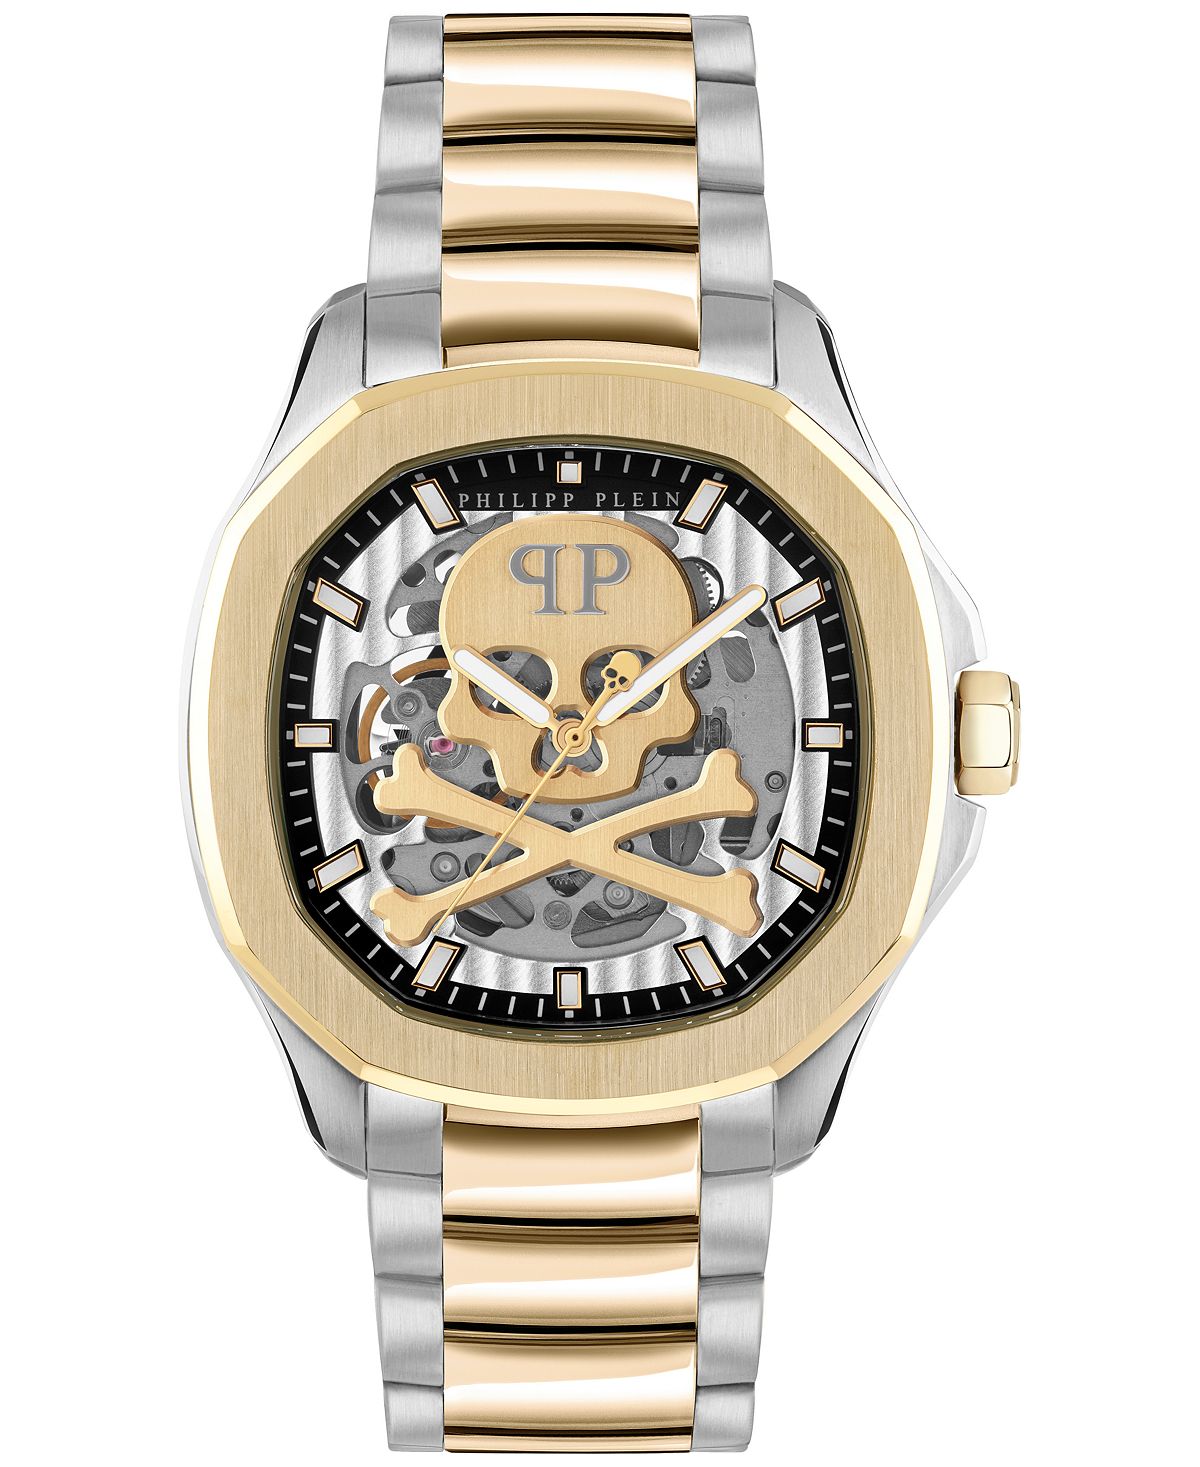 Мужские автоматические часы Skeleton Spectre с двухцветным браслетом из нержавеющей стали, 42 мм Philipp Plein часы scarlette 38mm fossil цвет stainless steel gold